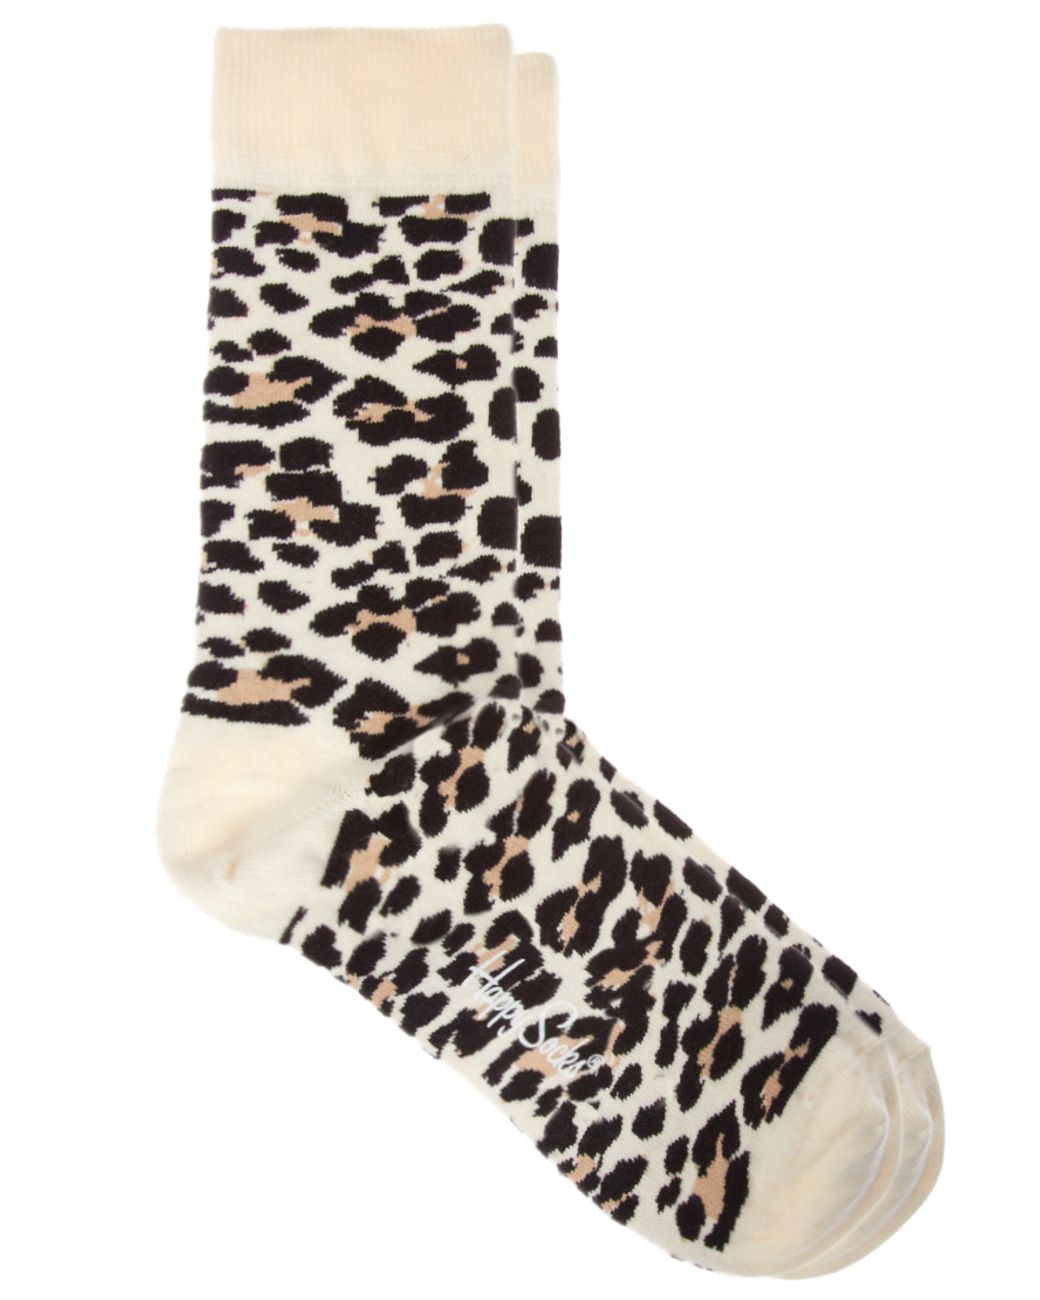 3 x Mens Leopard Print Crew Length Everyday Use Cotton Lycra Animal Print Socks 